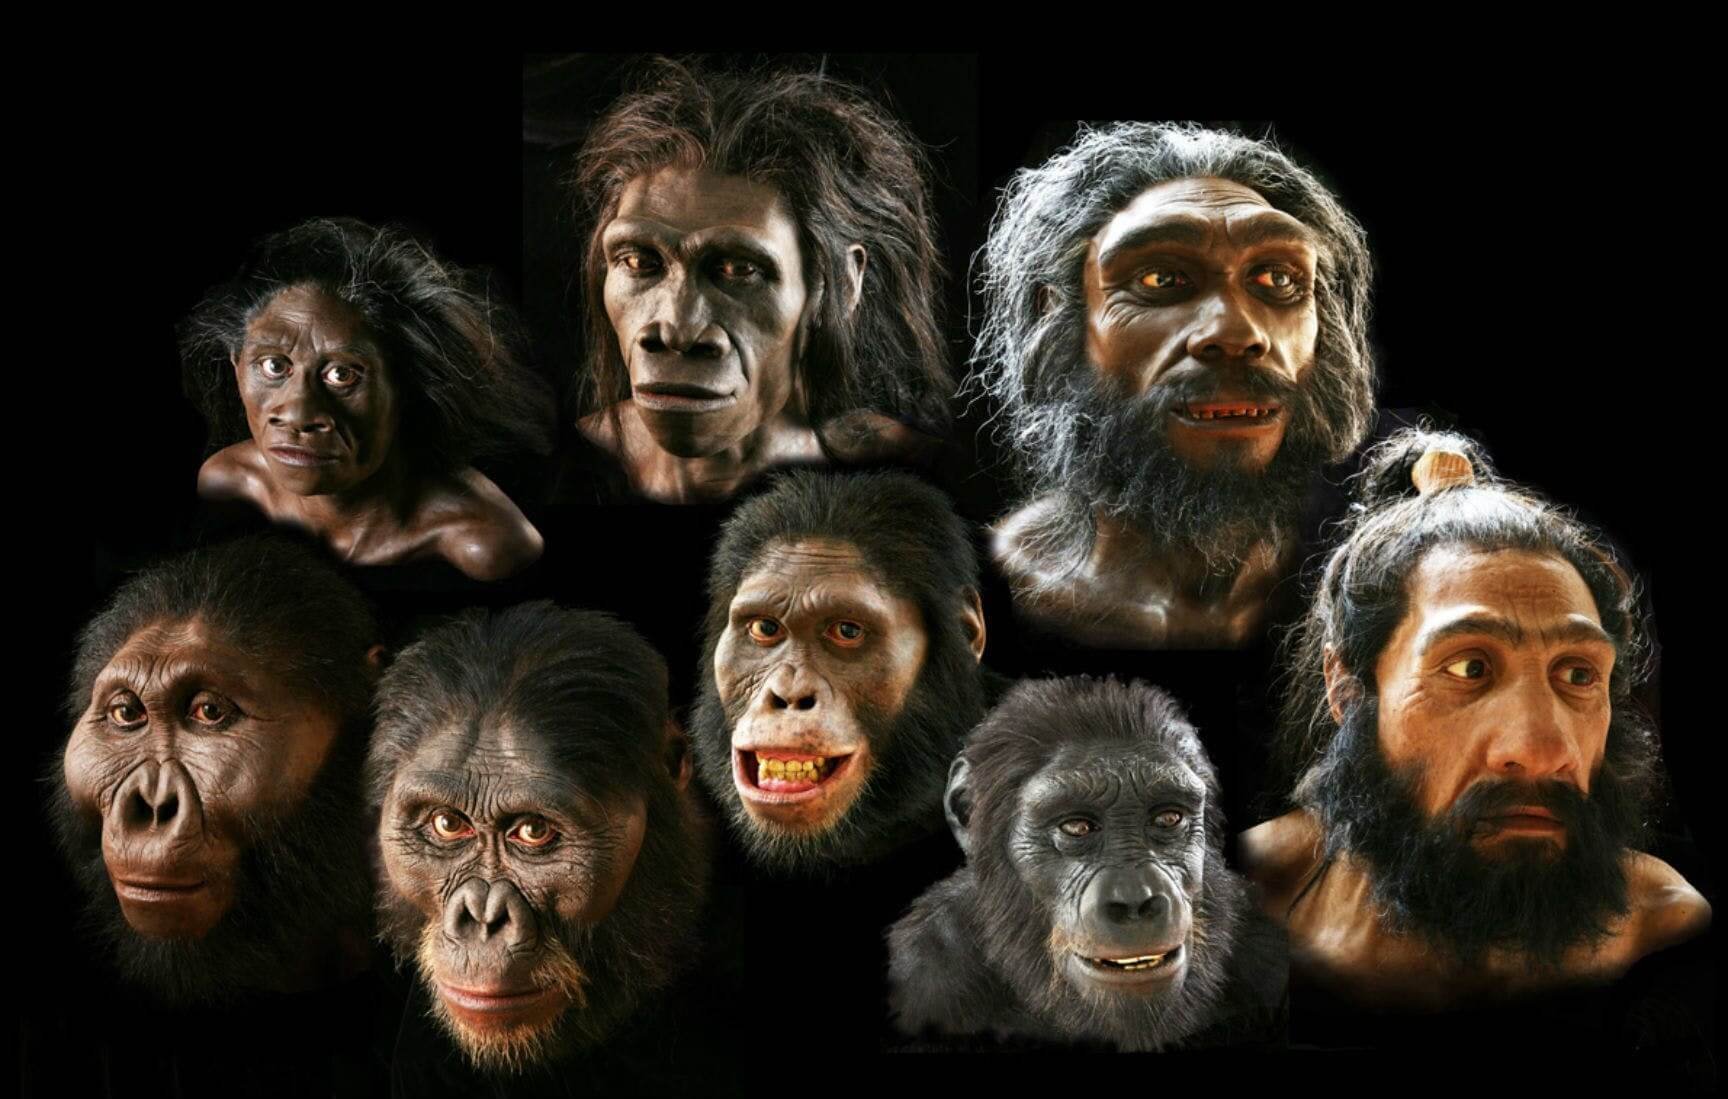 Человек обезьяна название. Эволюция Дарвин хомо. Хомо сапиенс обезьяна. Хомо сапиенс Эволюция женщины. Приматы гоминиды.